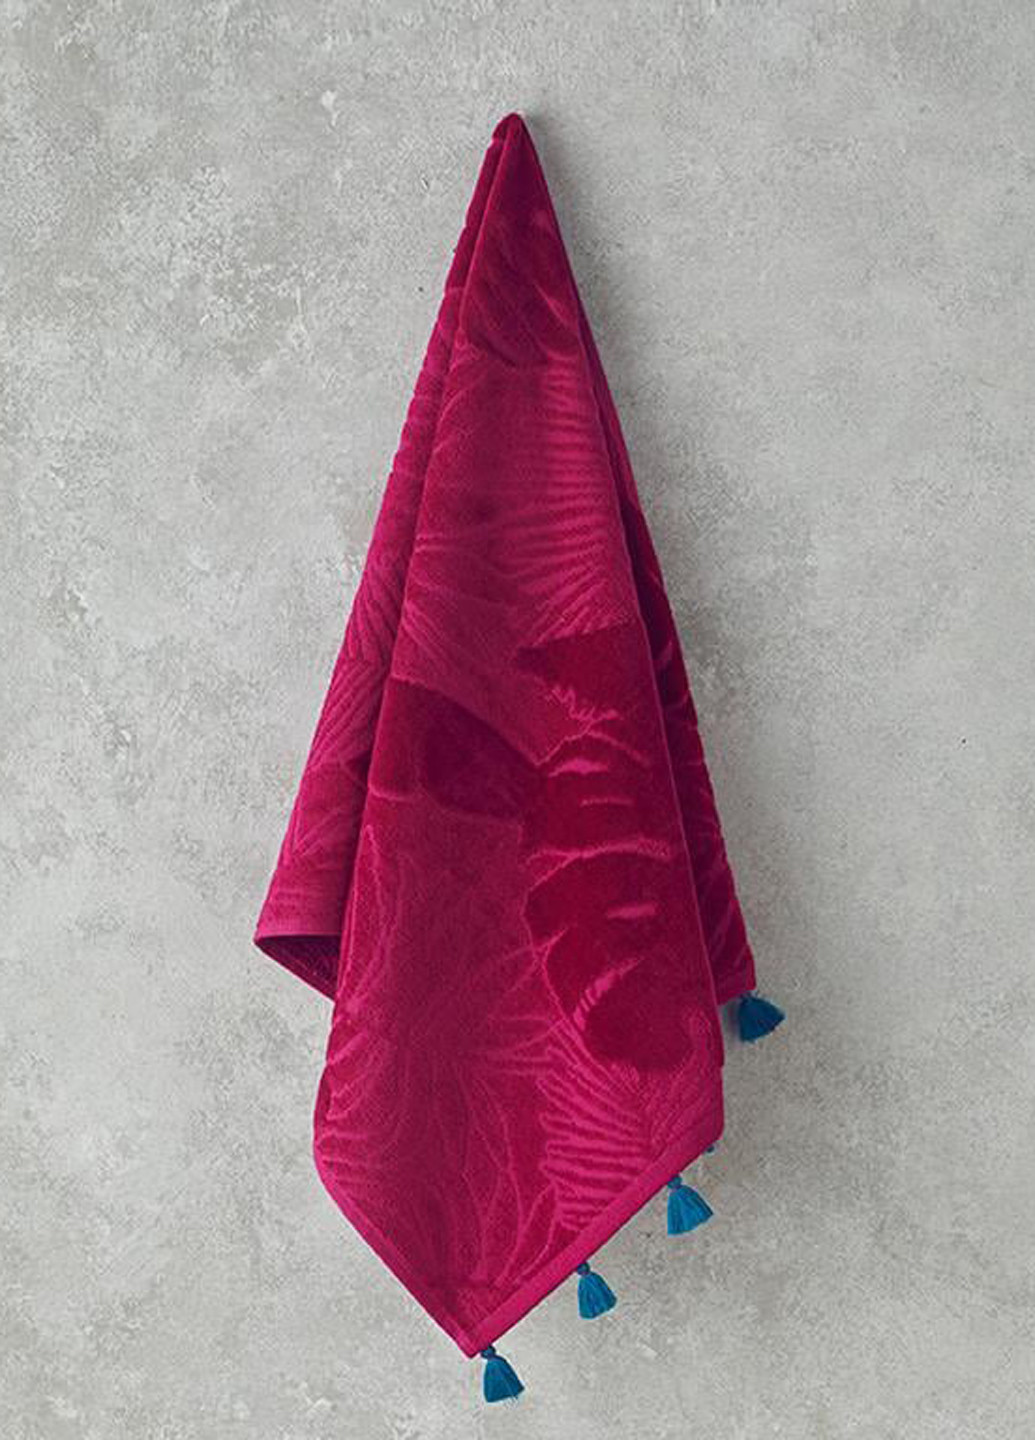 English Home полотенце для лица, 50х80 см однотонный светло-вишневый производство - Турция